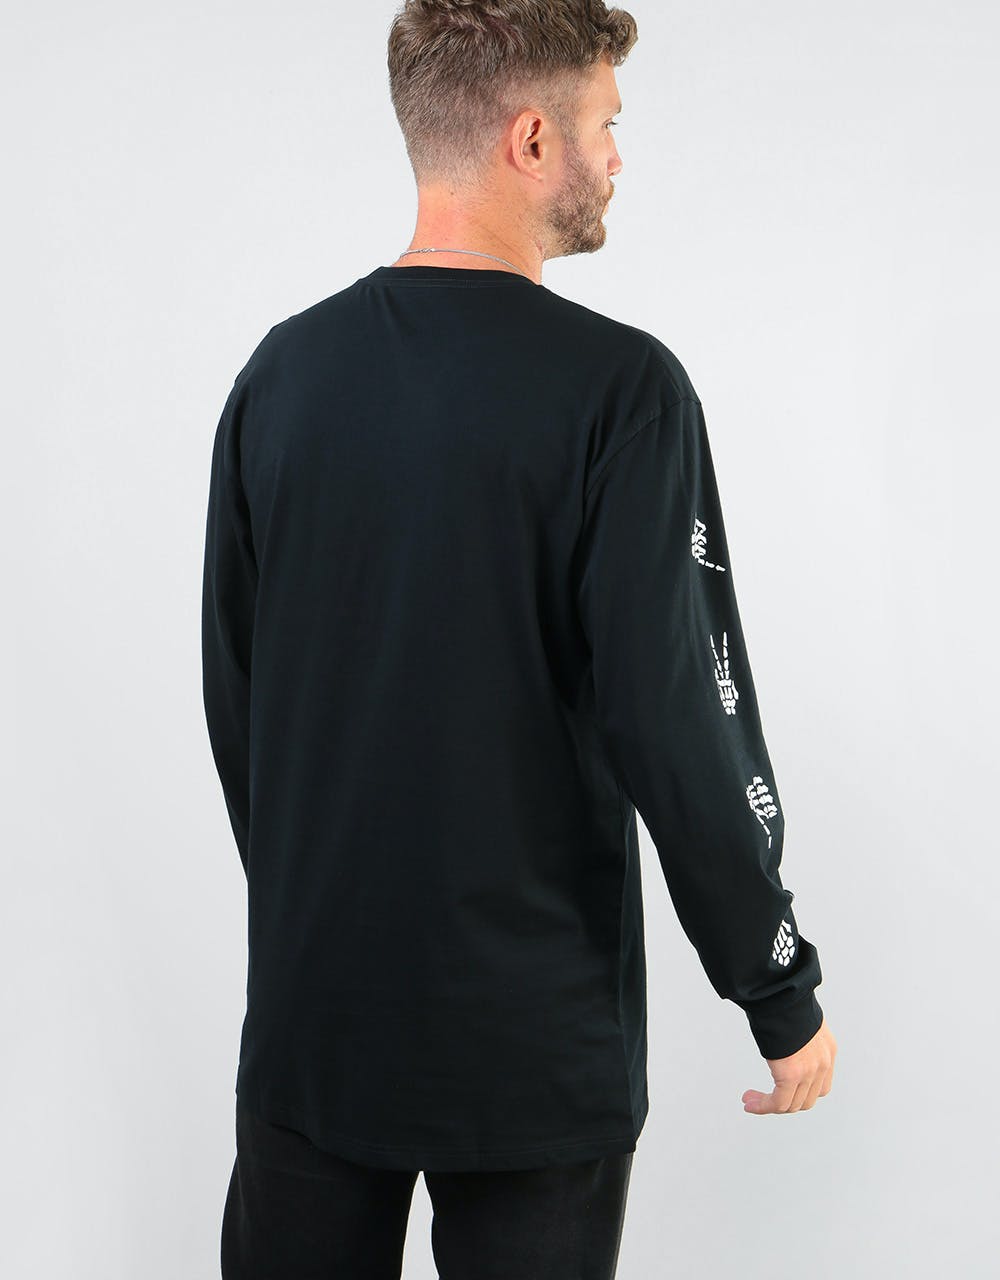 Vans Boneyard L/S T-Shirt - Black